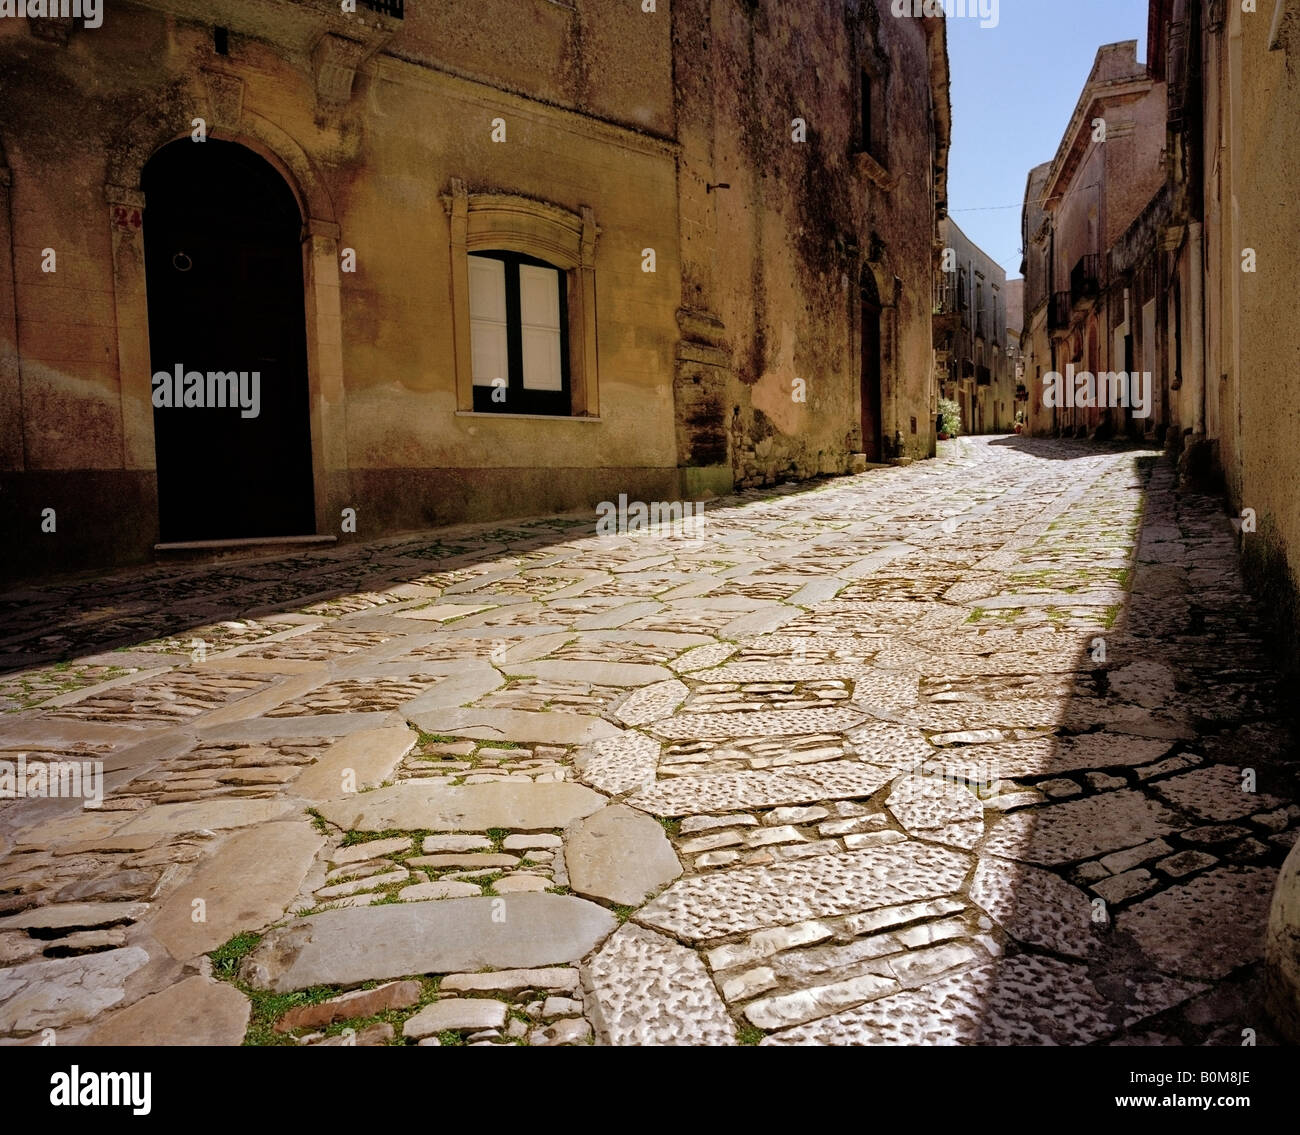 Las calles empedradas de Erice Sicilia Italia ue. Foto de stock